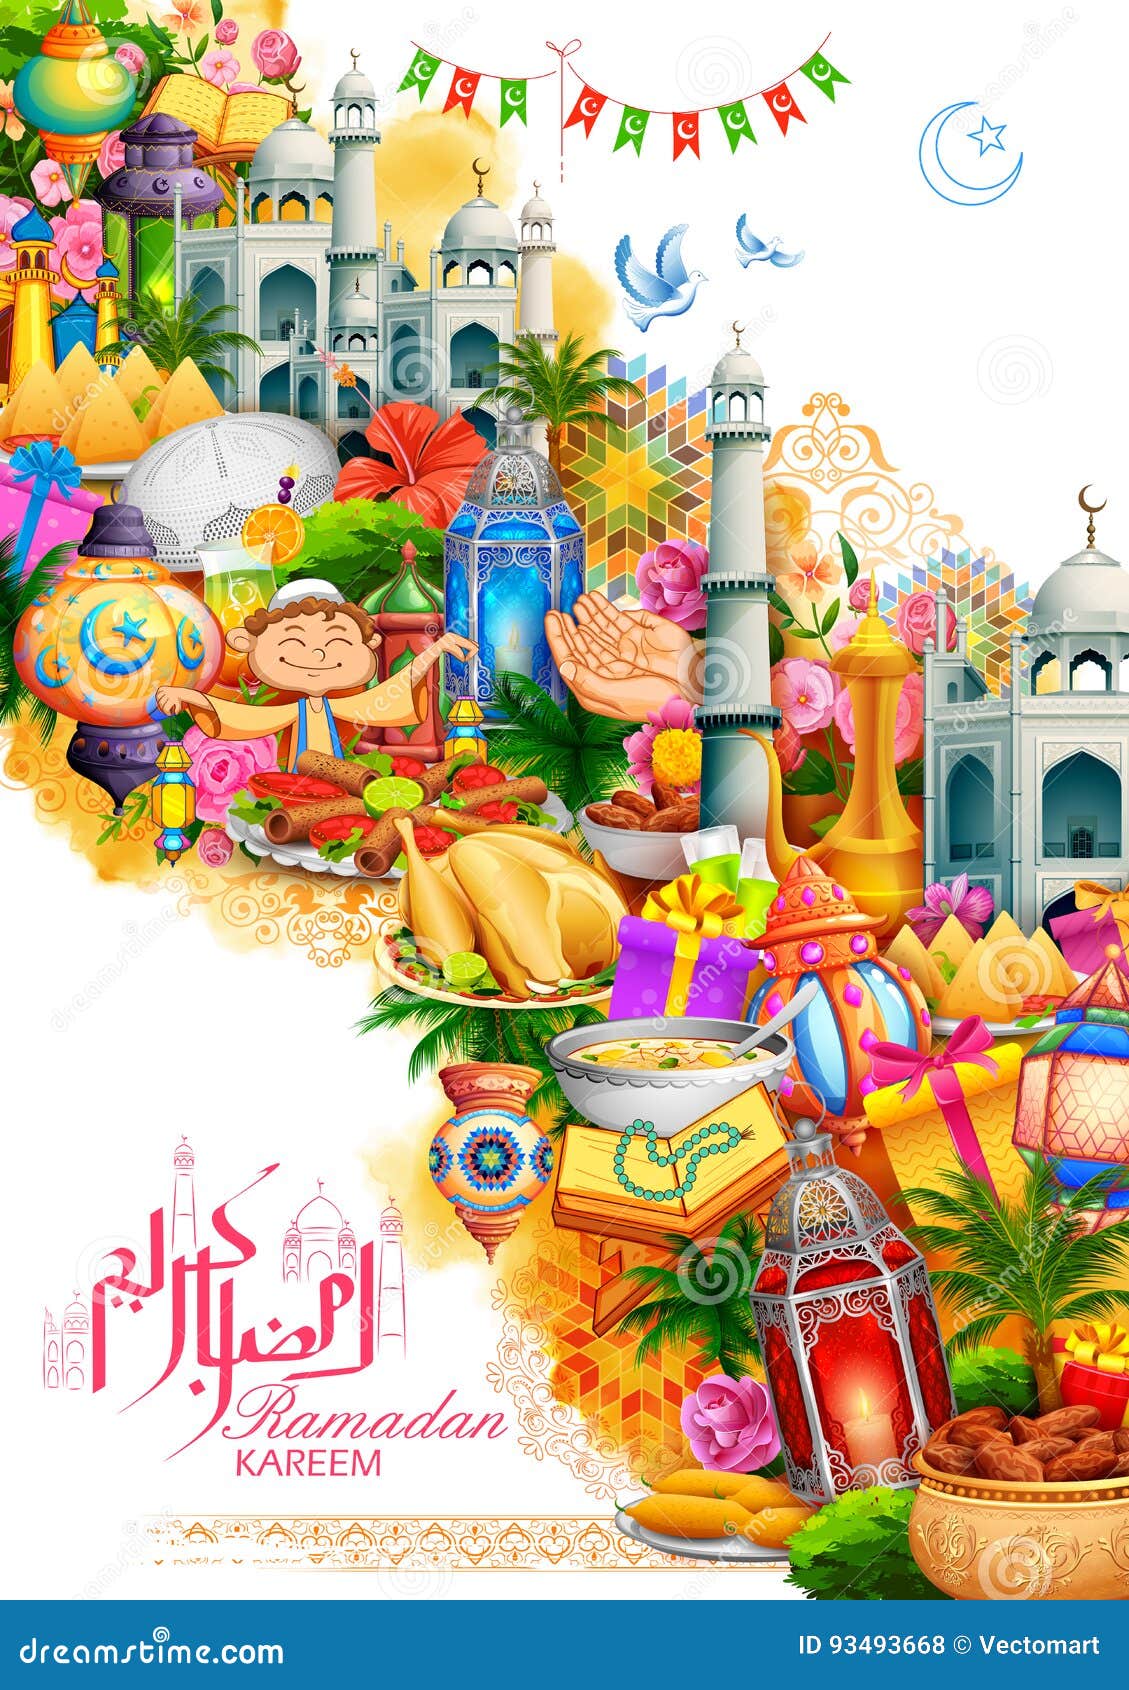 ramadan kareem generous ramadan greetings for islam religious festival eid on holy month of ramazan